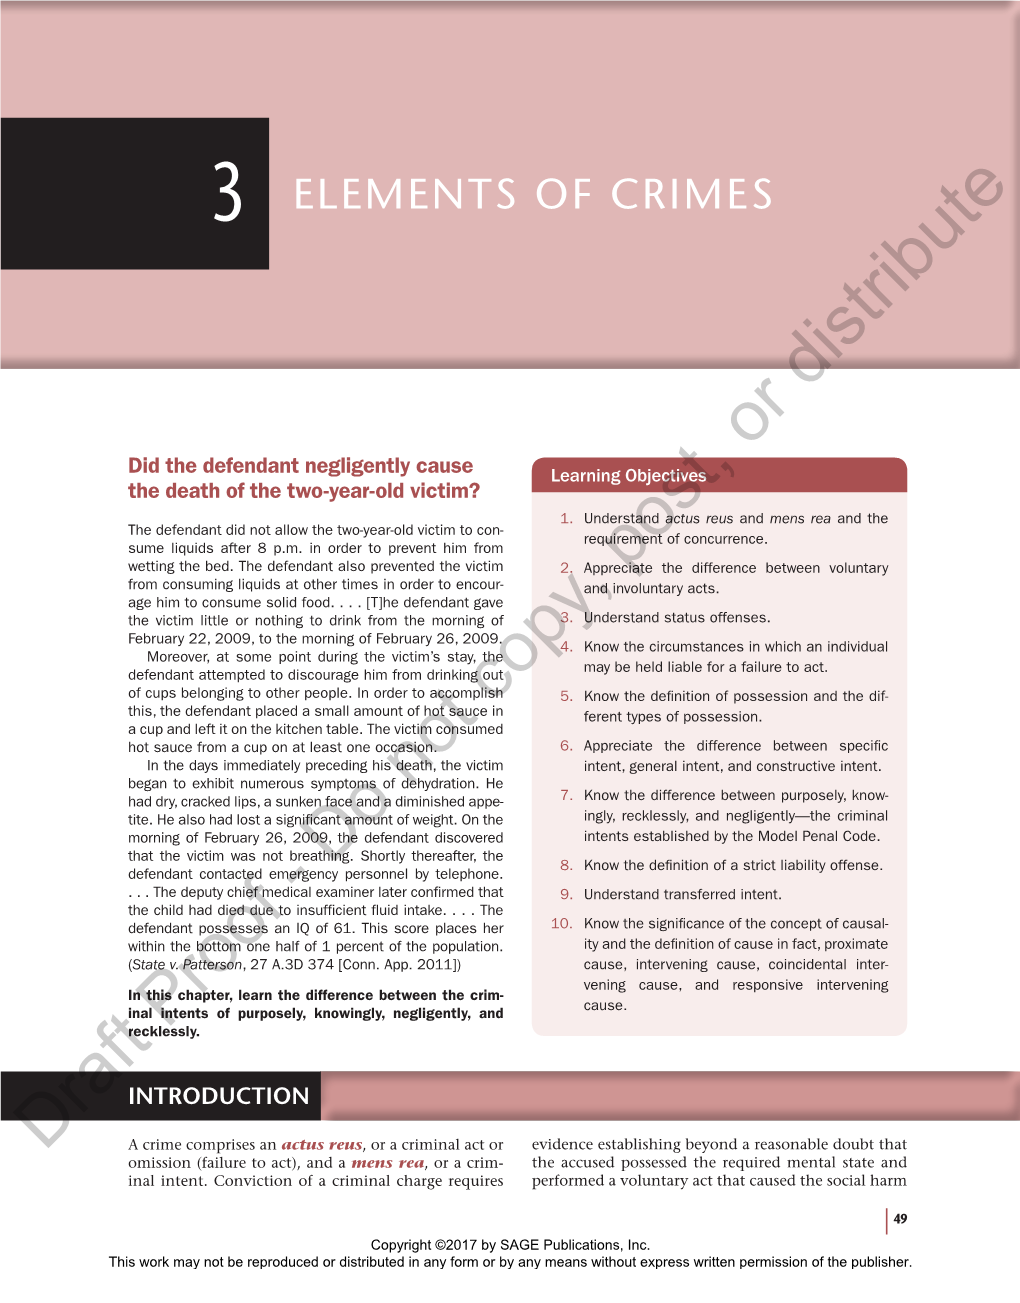 Elements of Crimes